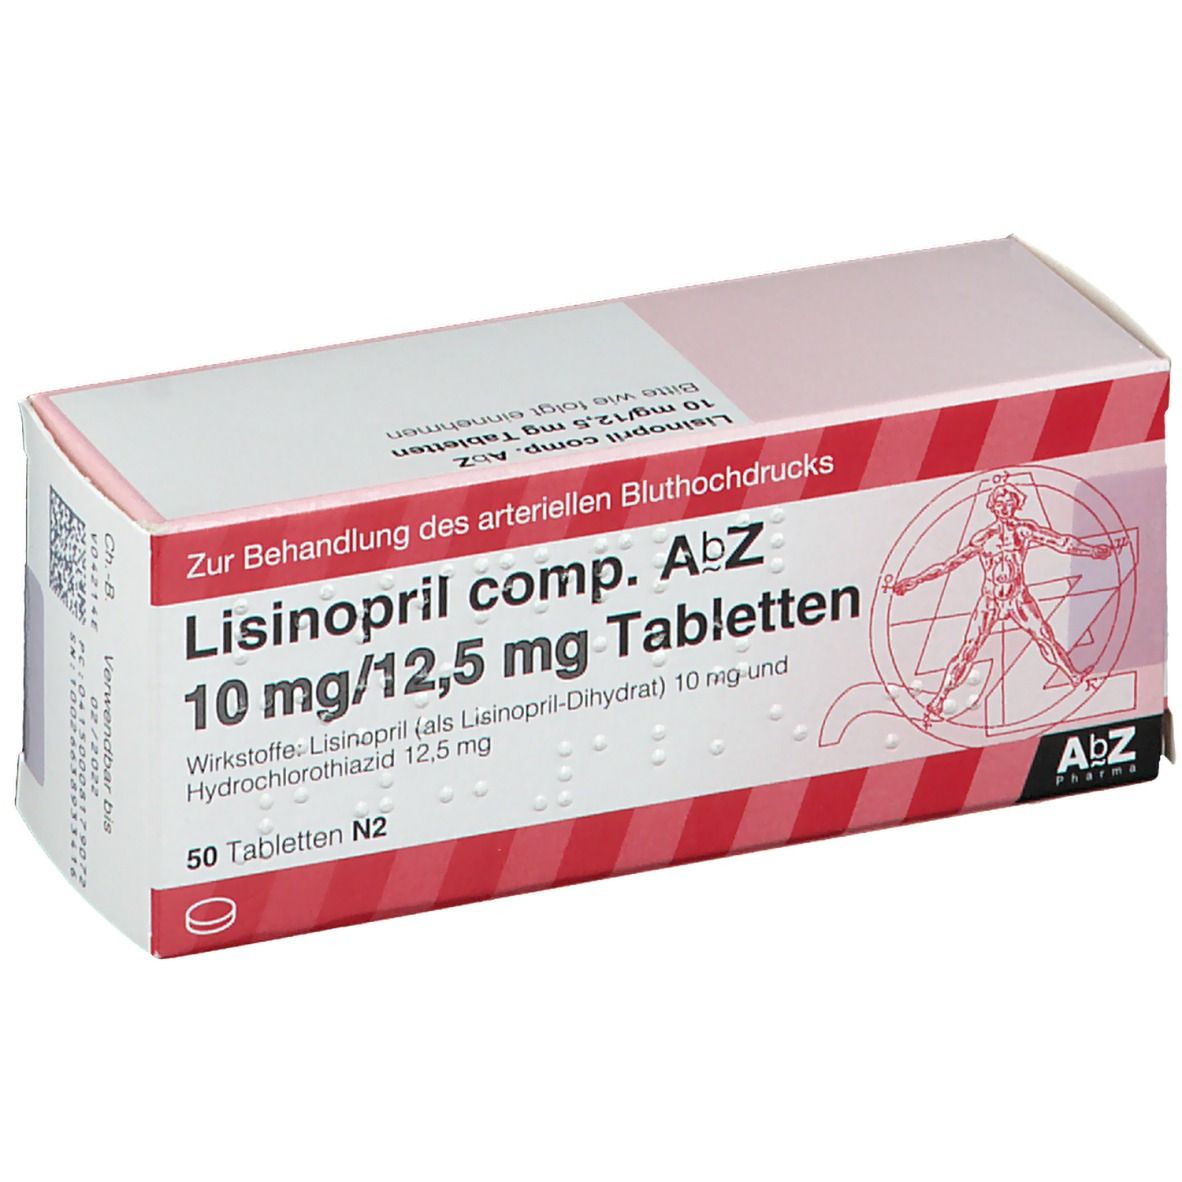 Lisinopril Comp AbZ10/12.5